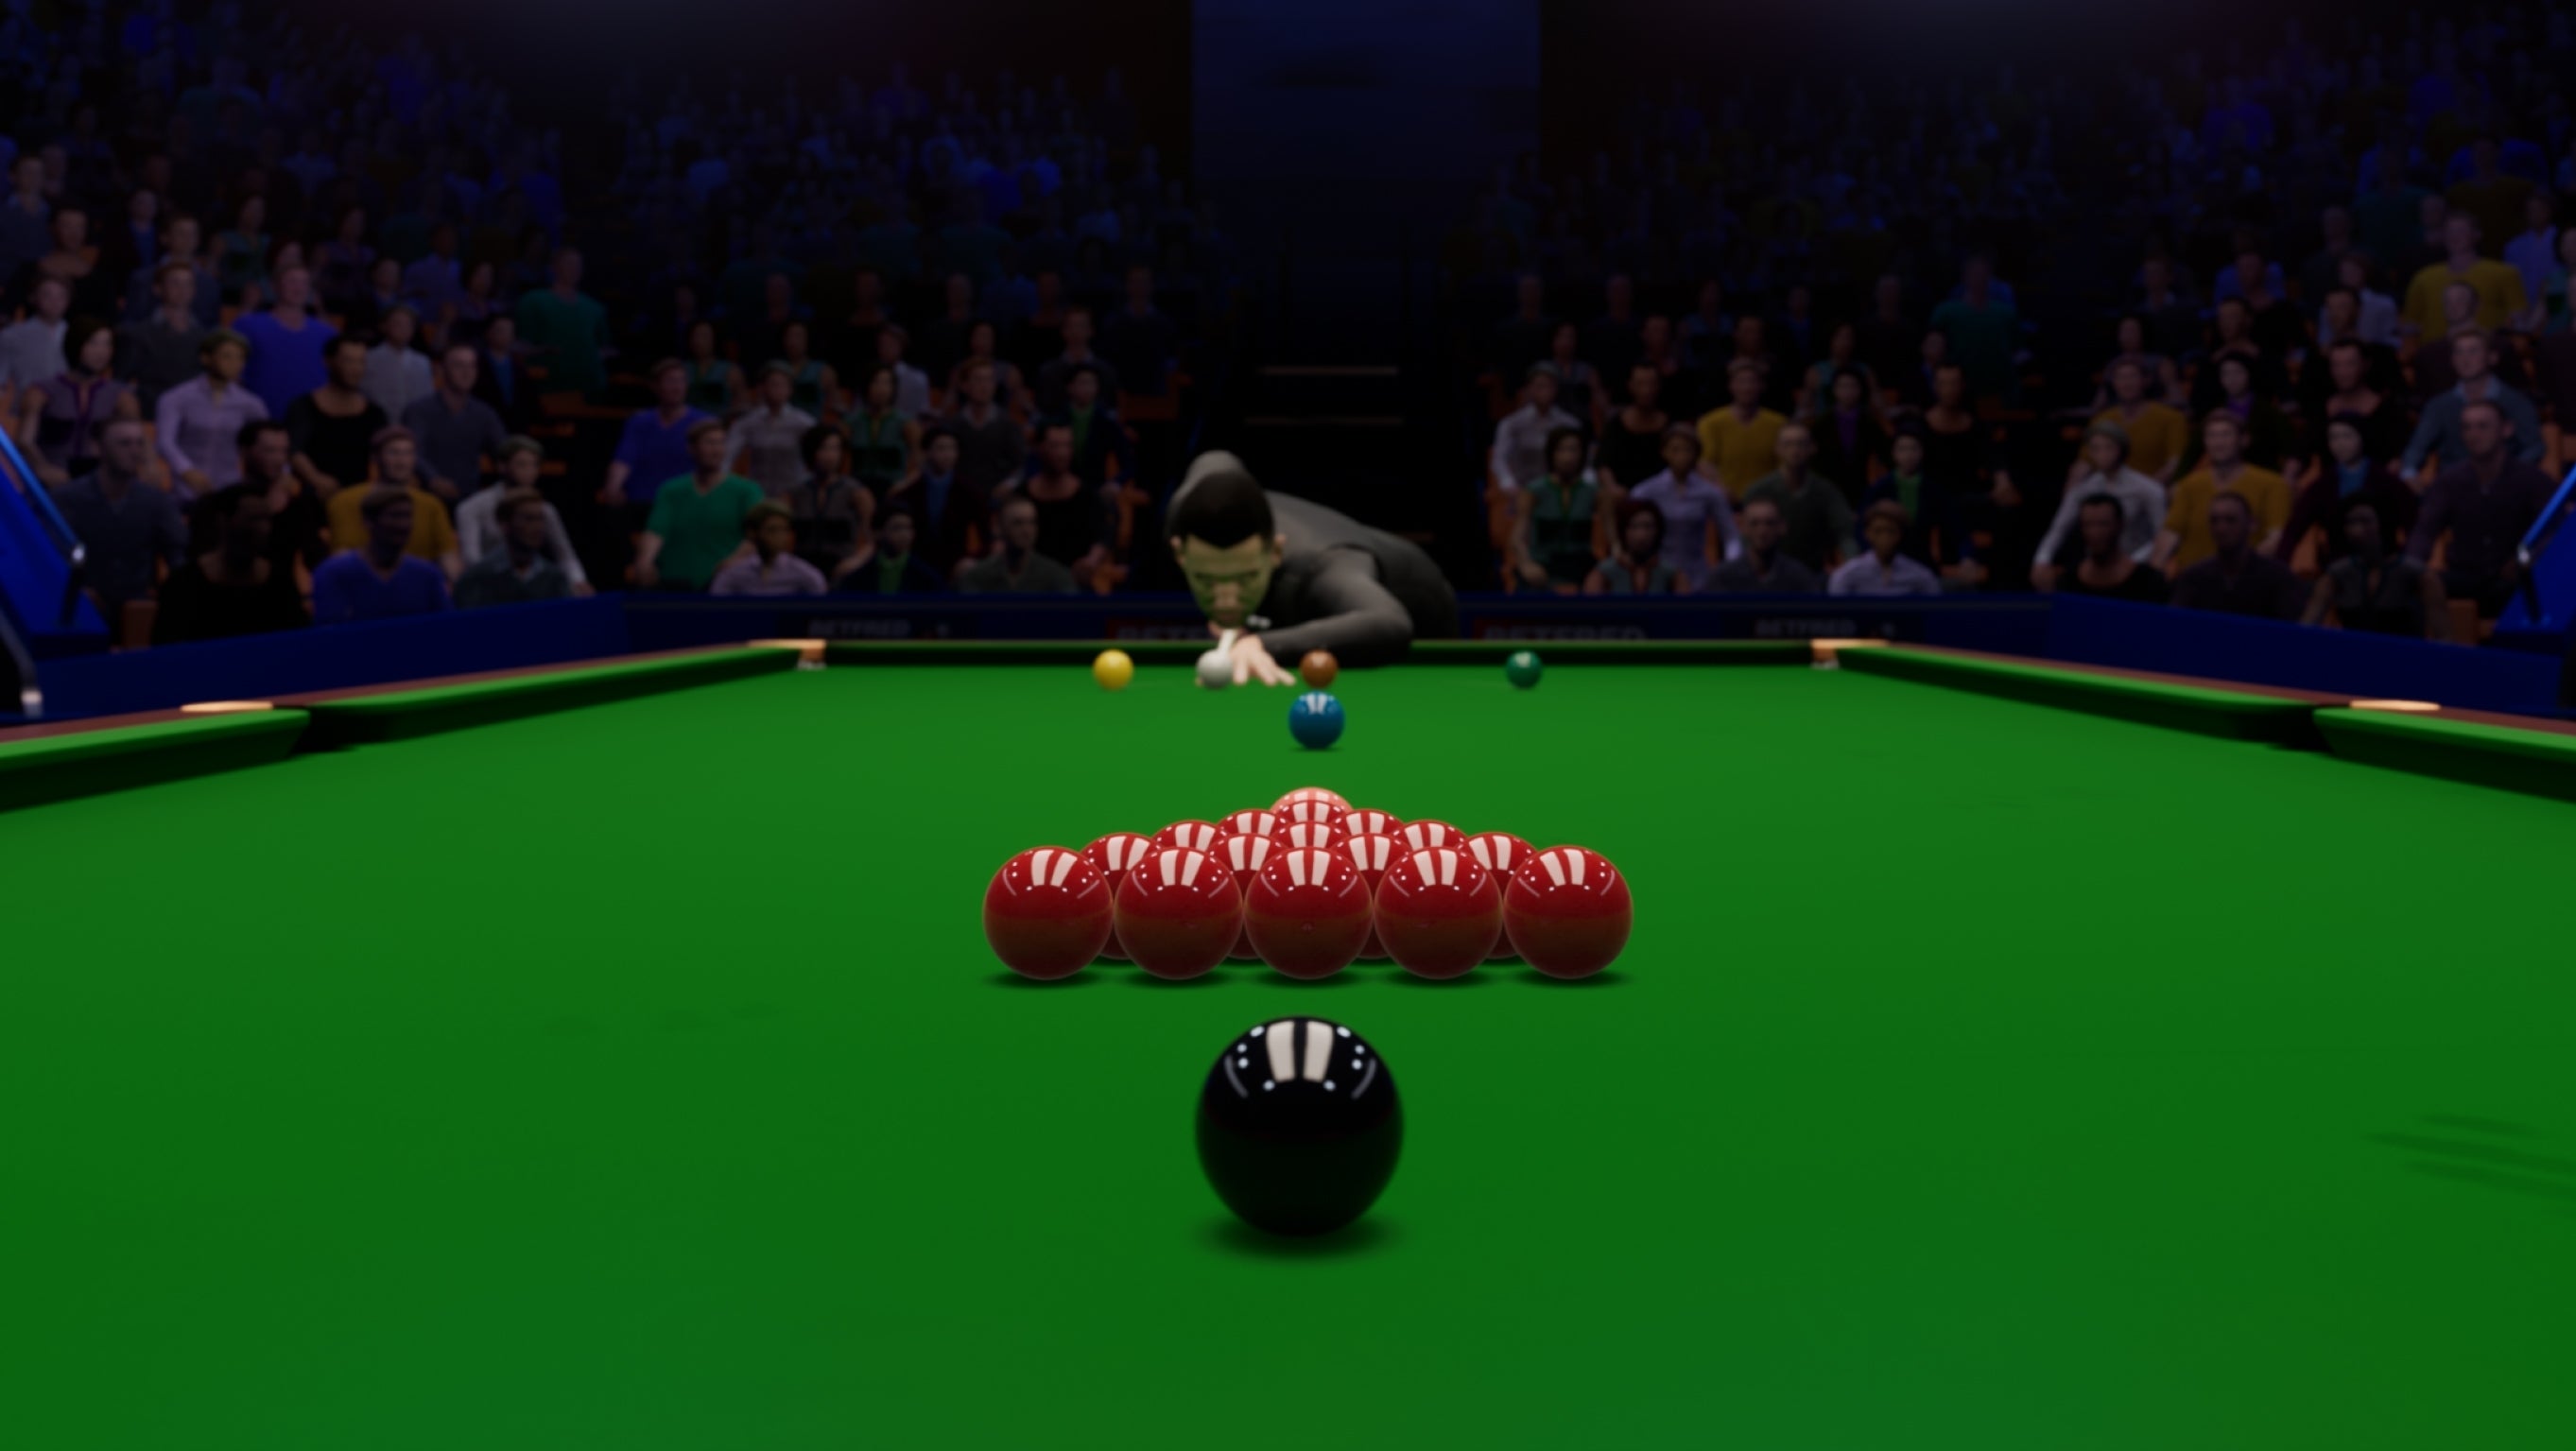 Snooker 19 breaks off right on cue Eurogamer